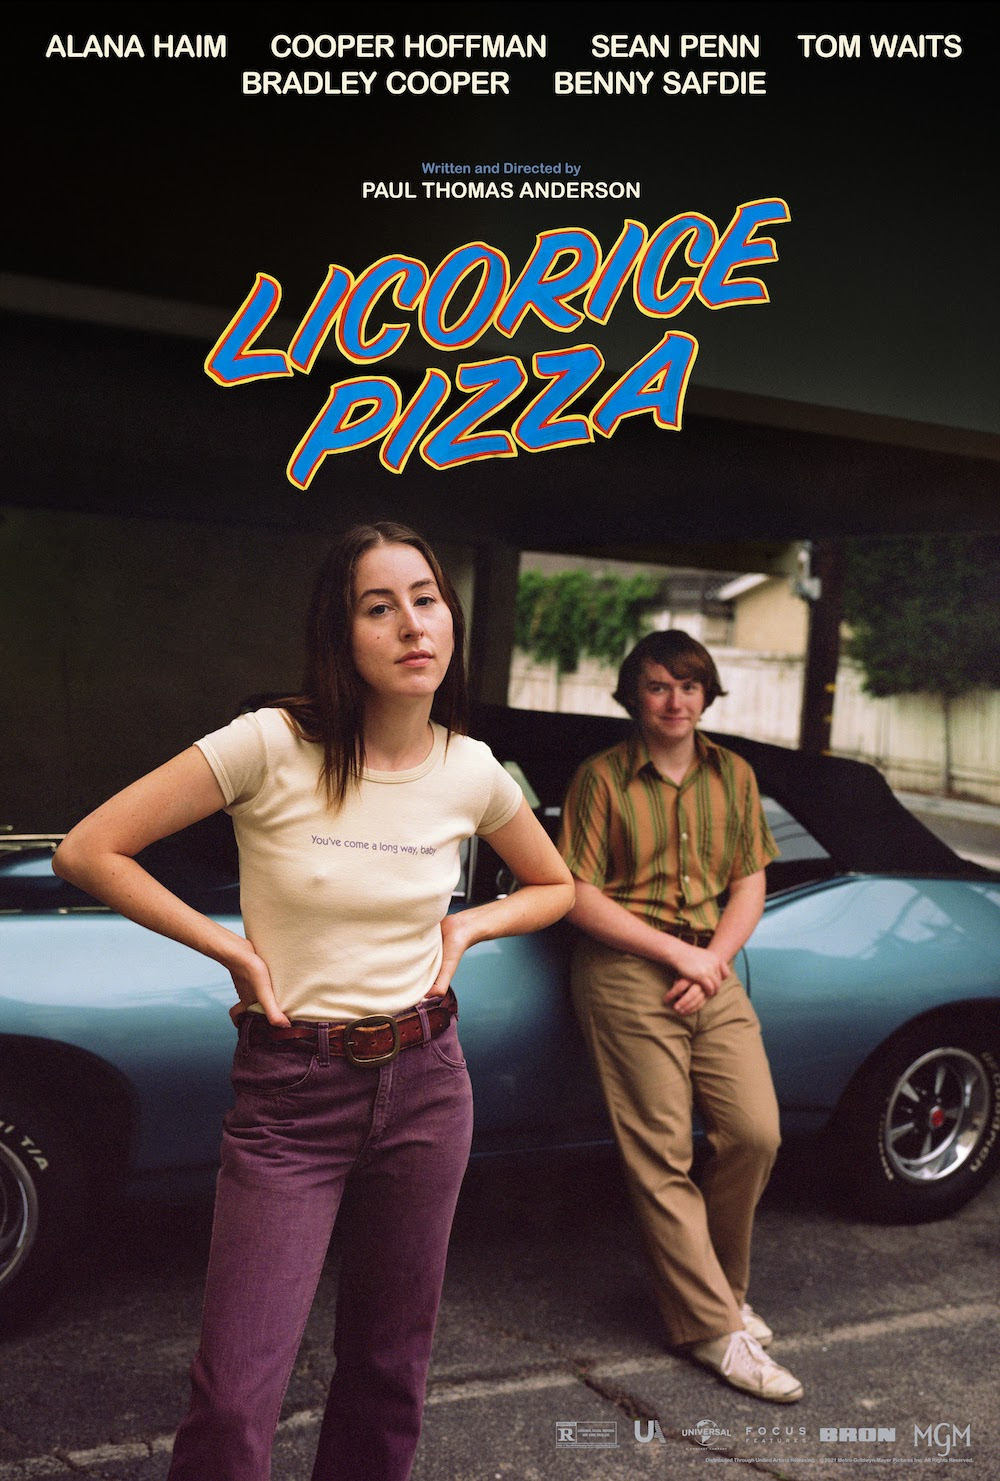 Licorice Pizza movie review